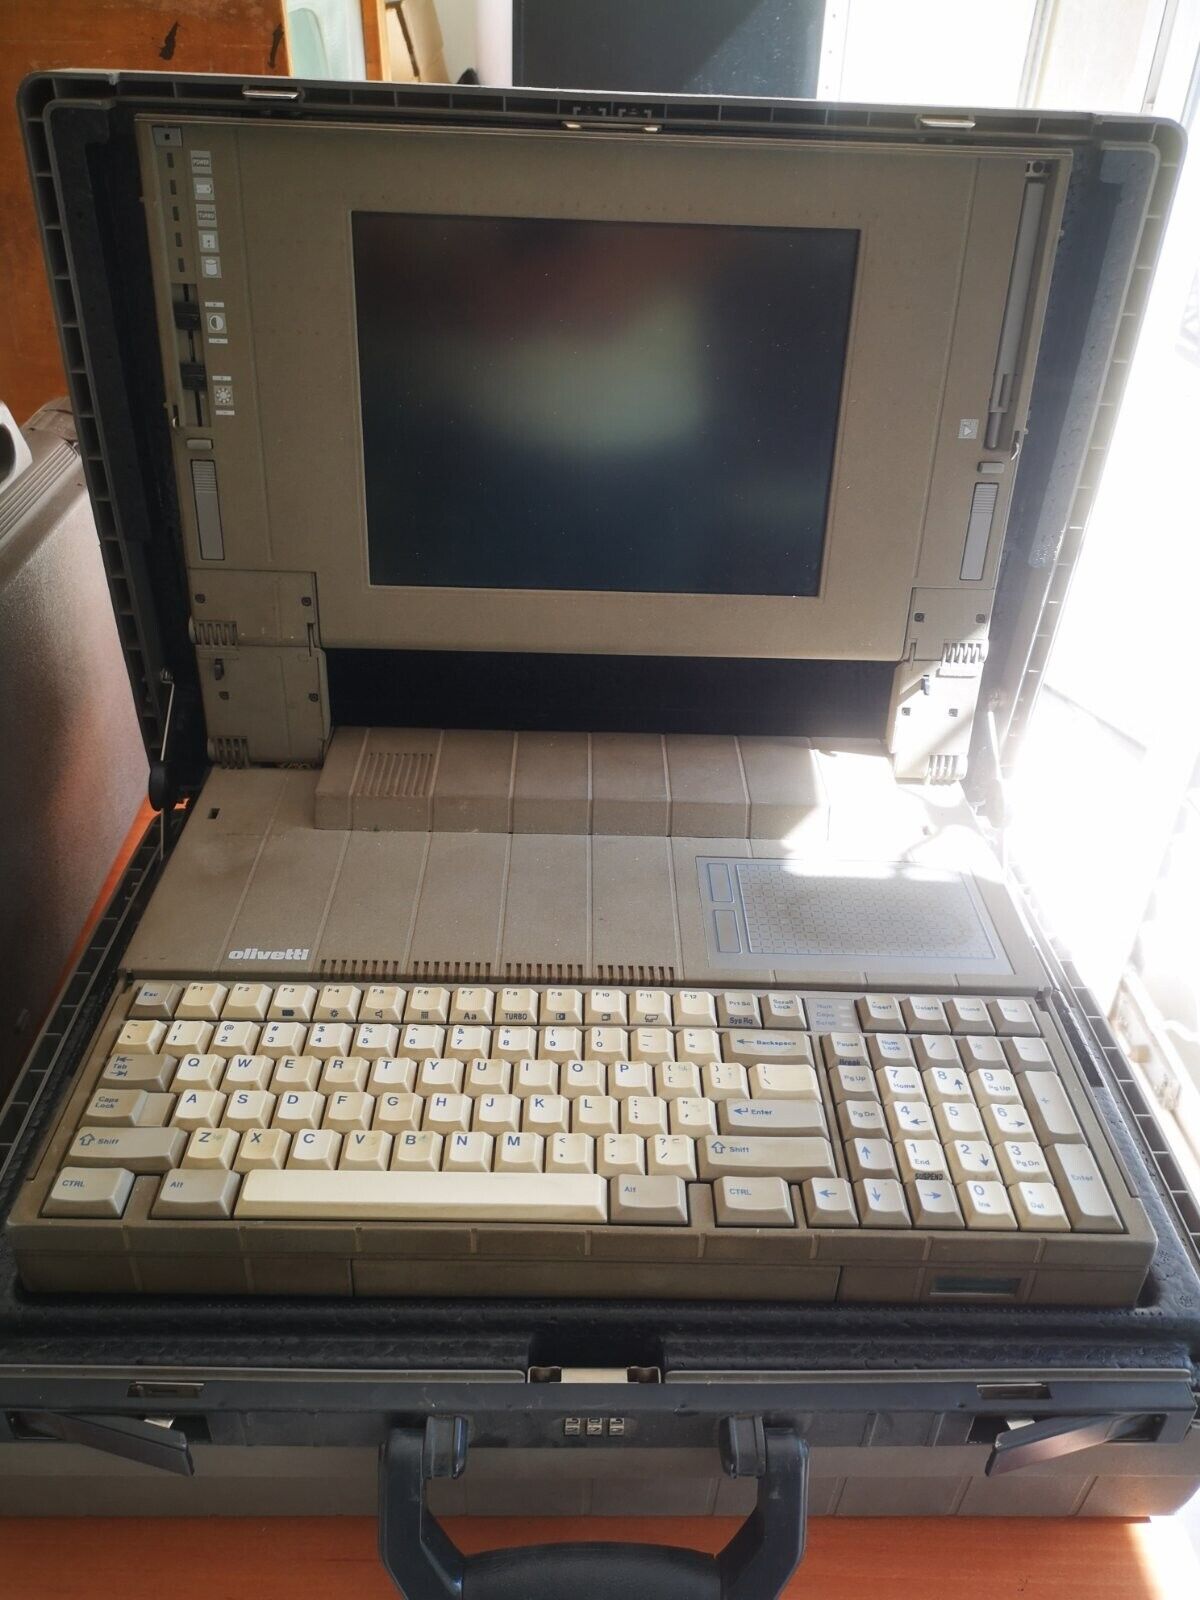 Old Vintage Laptop Olivetti S20 very rare